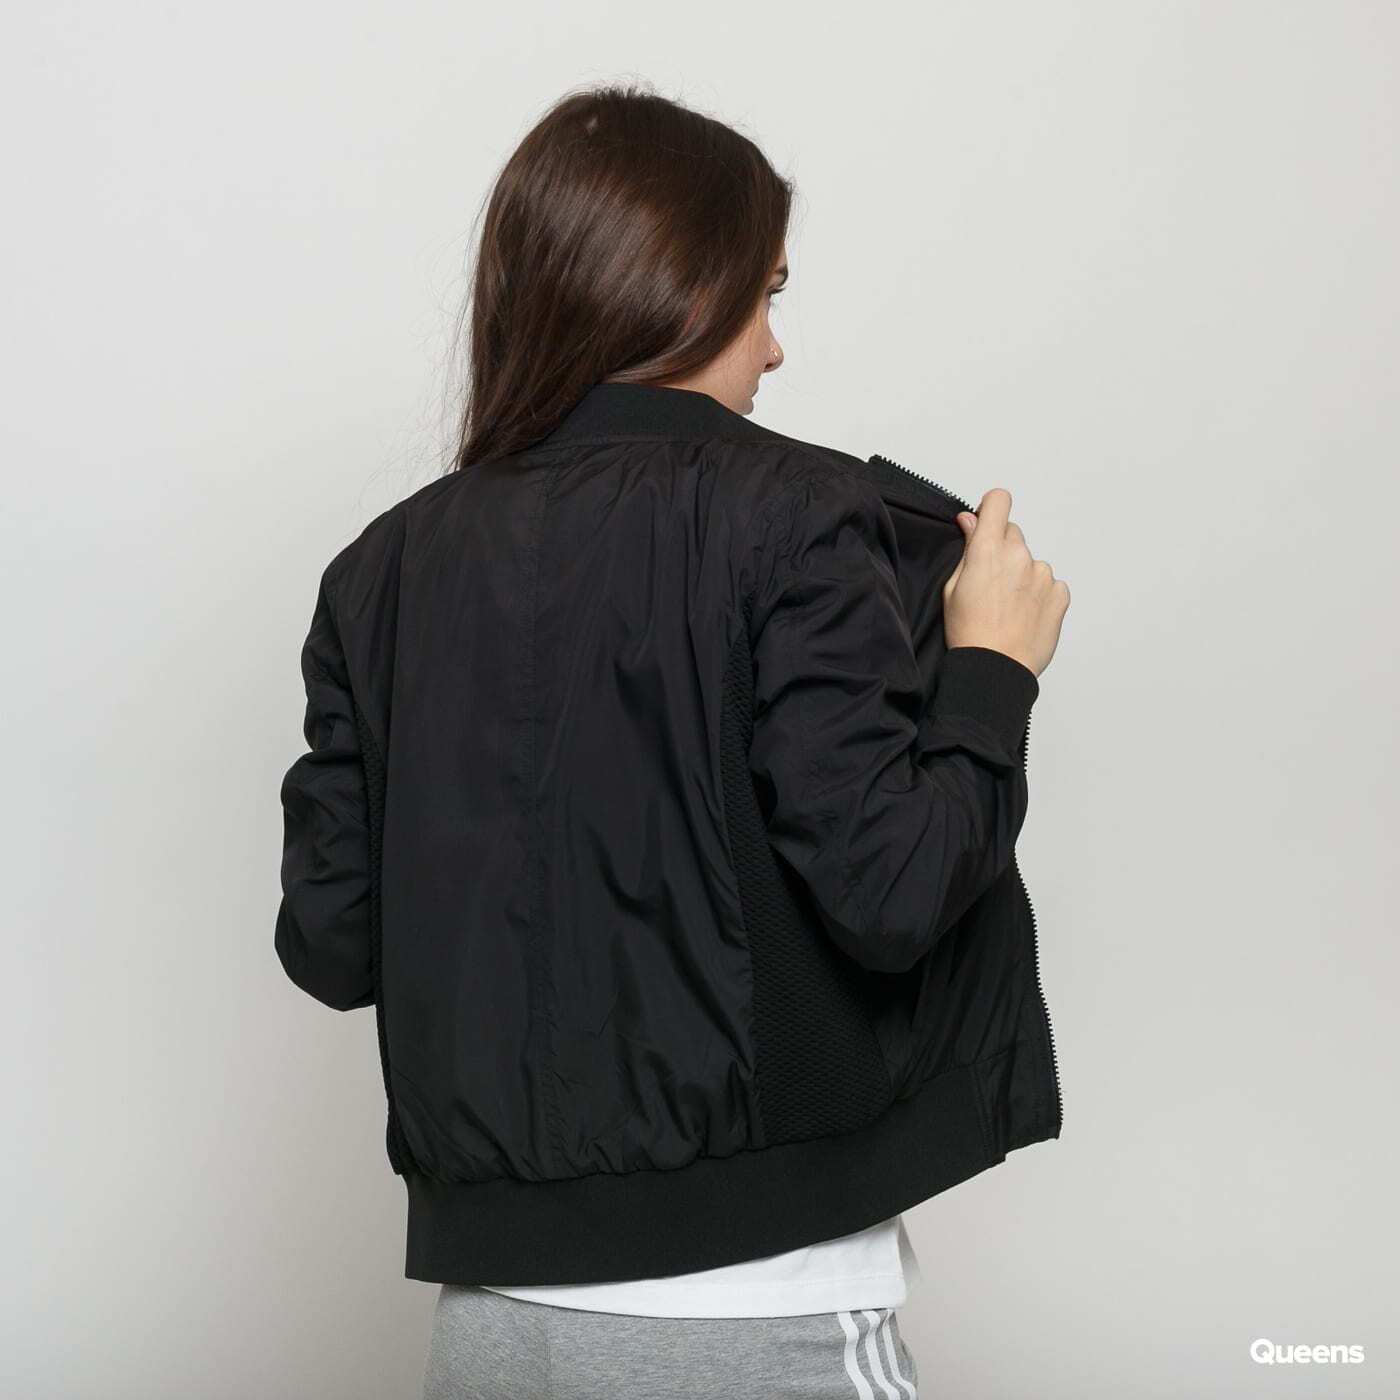 Queens Urban | Bomber Jackets Classics Black Light Ladies Jacket